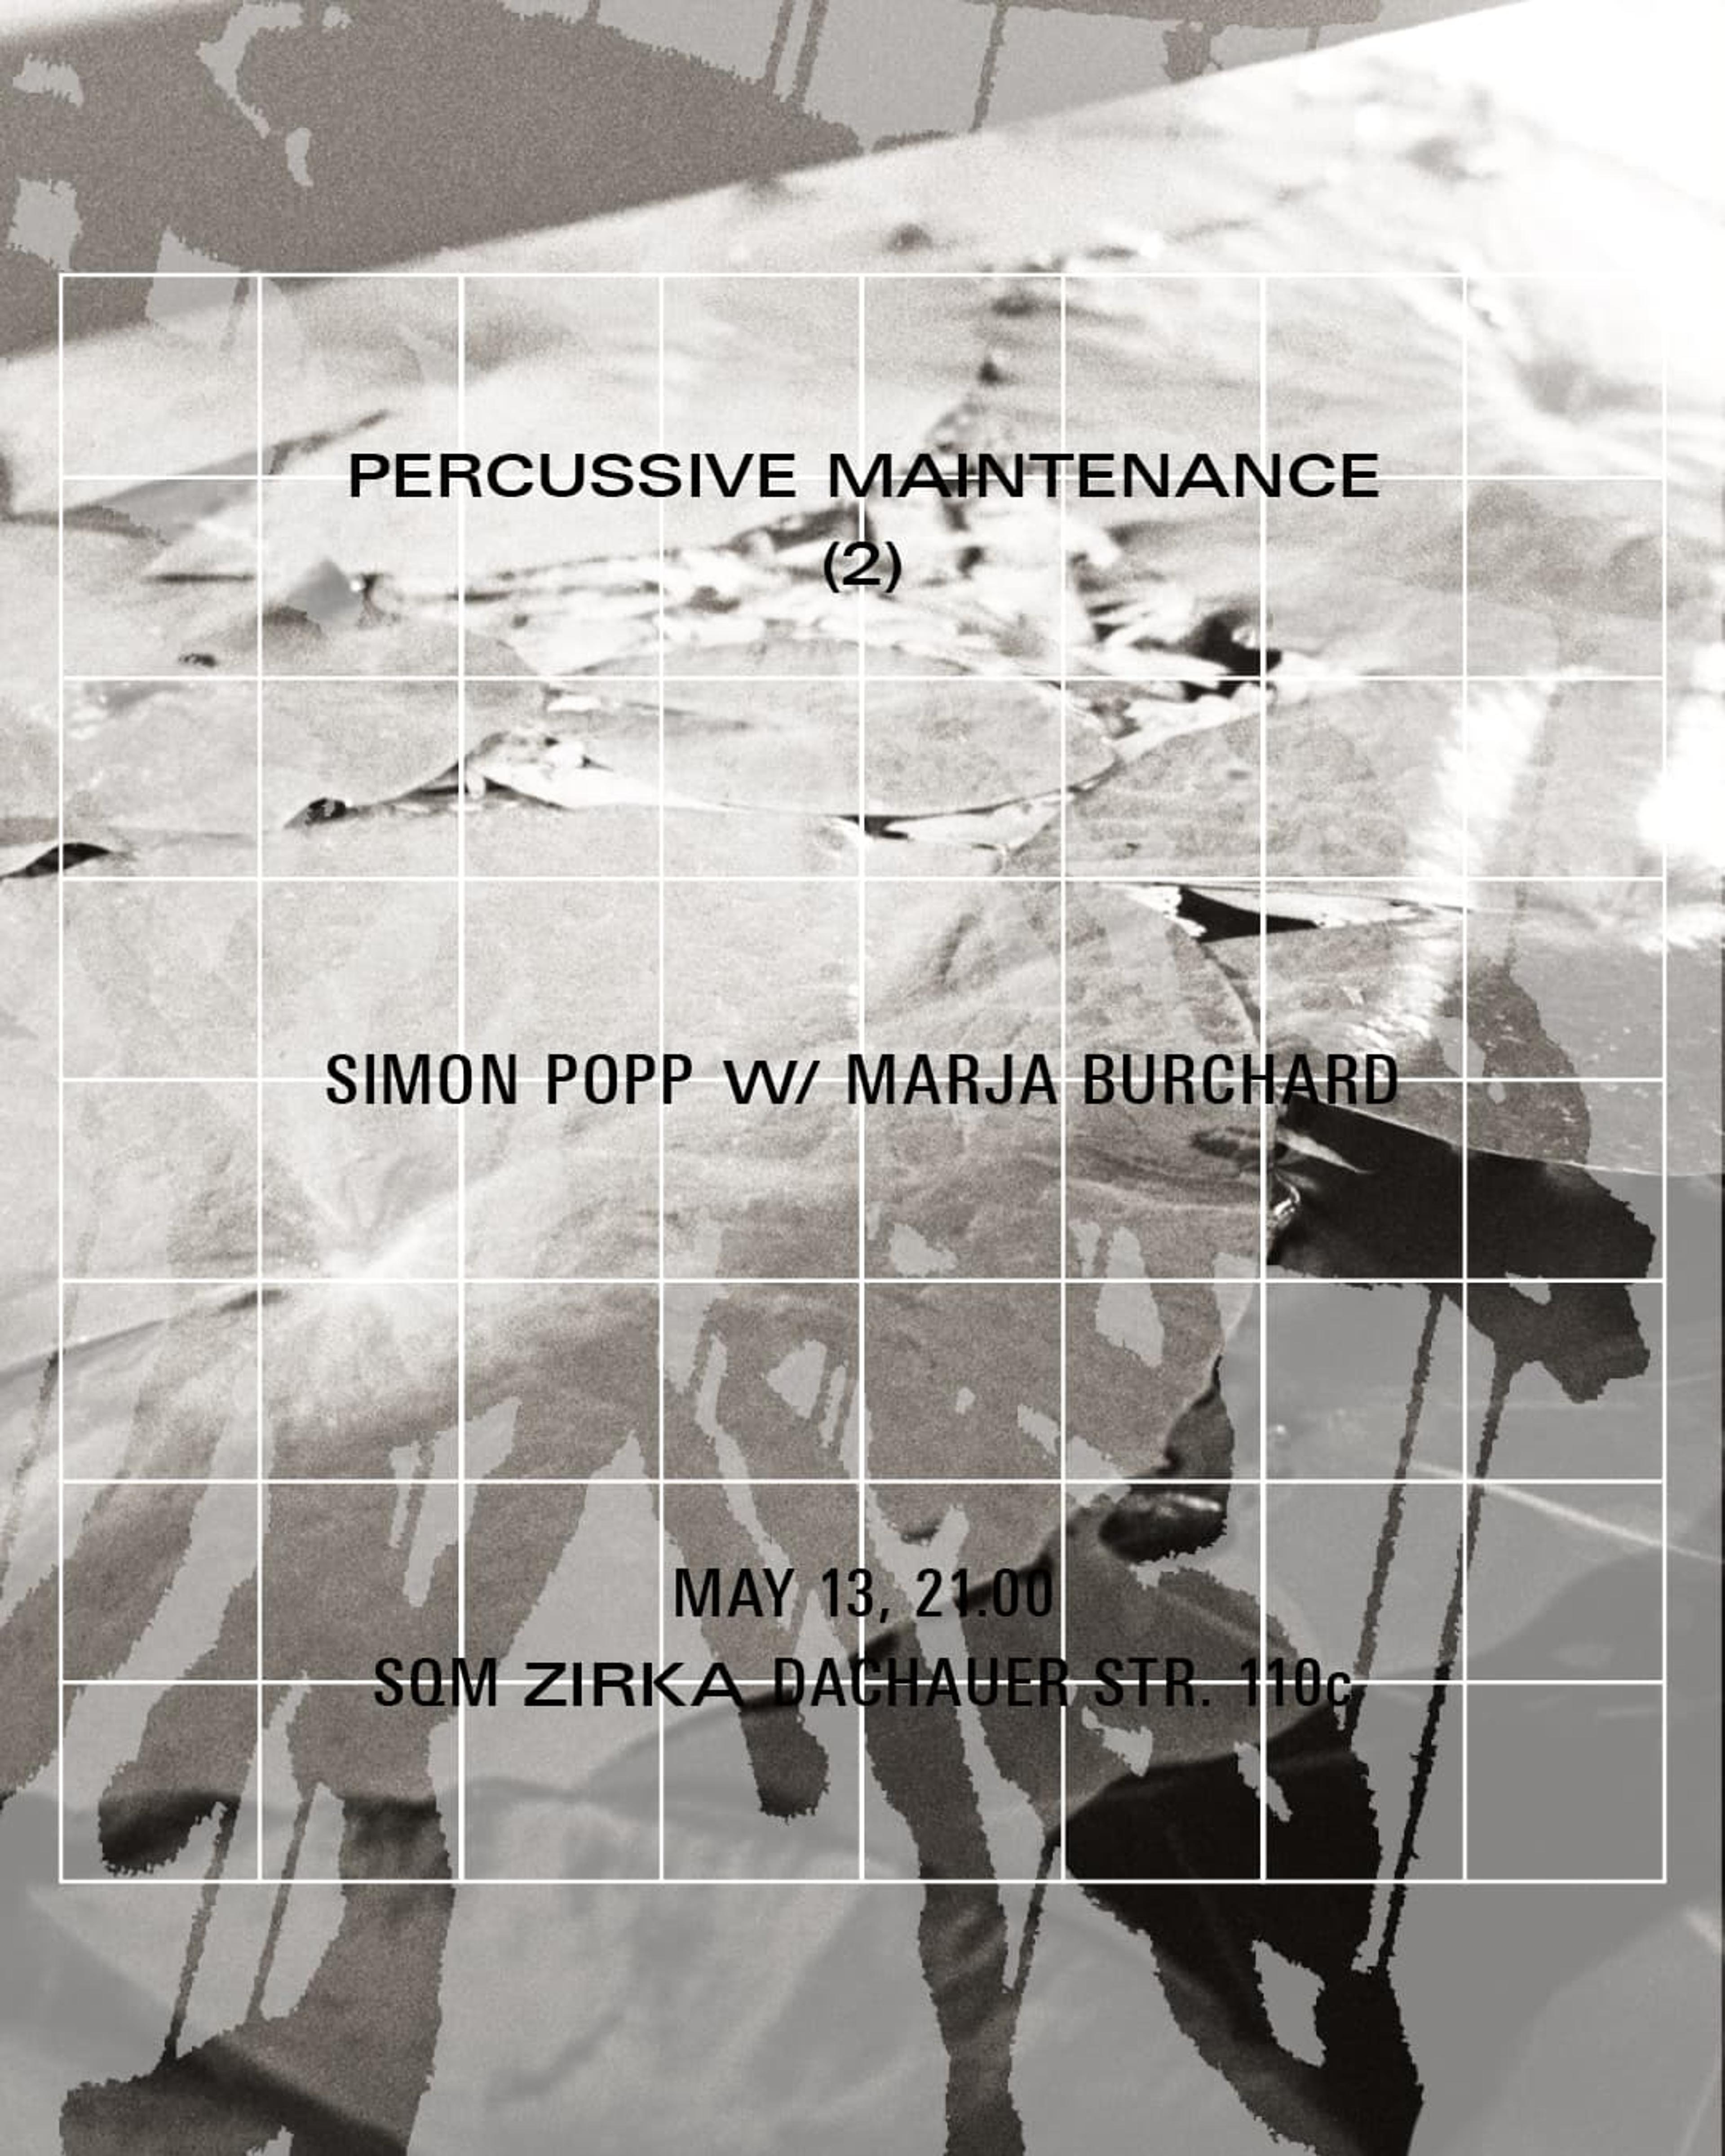 Announcement live improvisation concert with Marja Burchard (Embryo) and Simon Popp at Zirka Munich